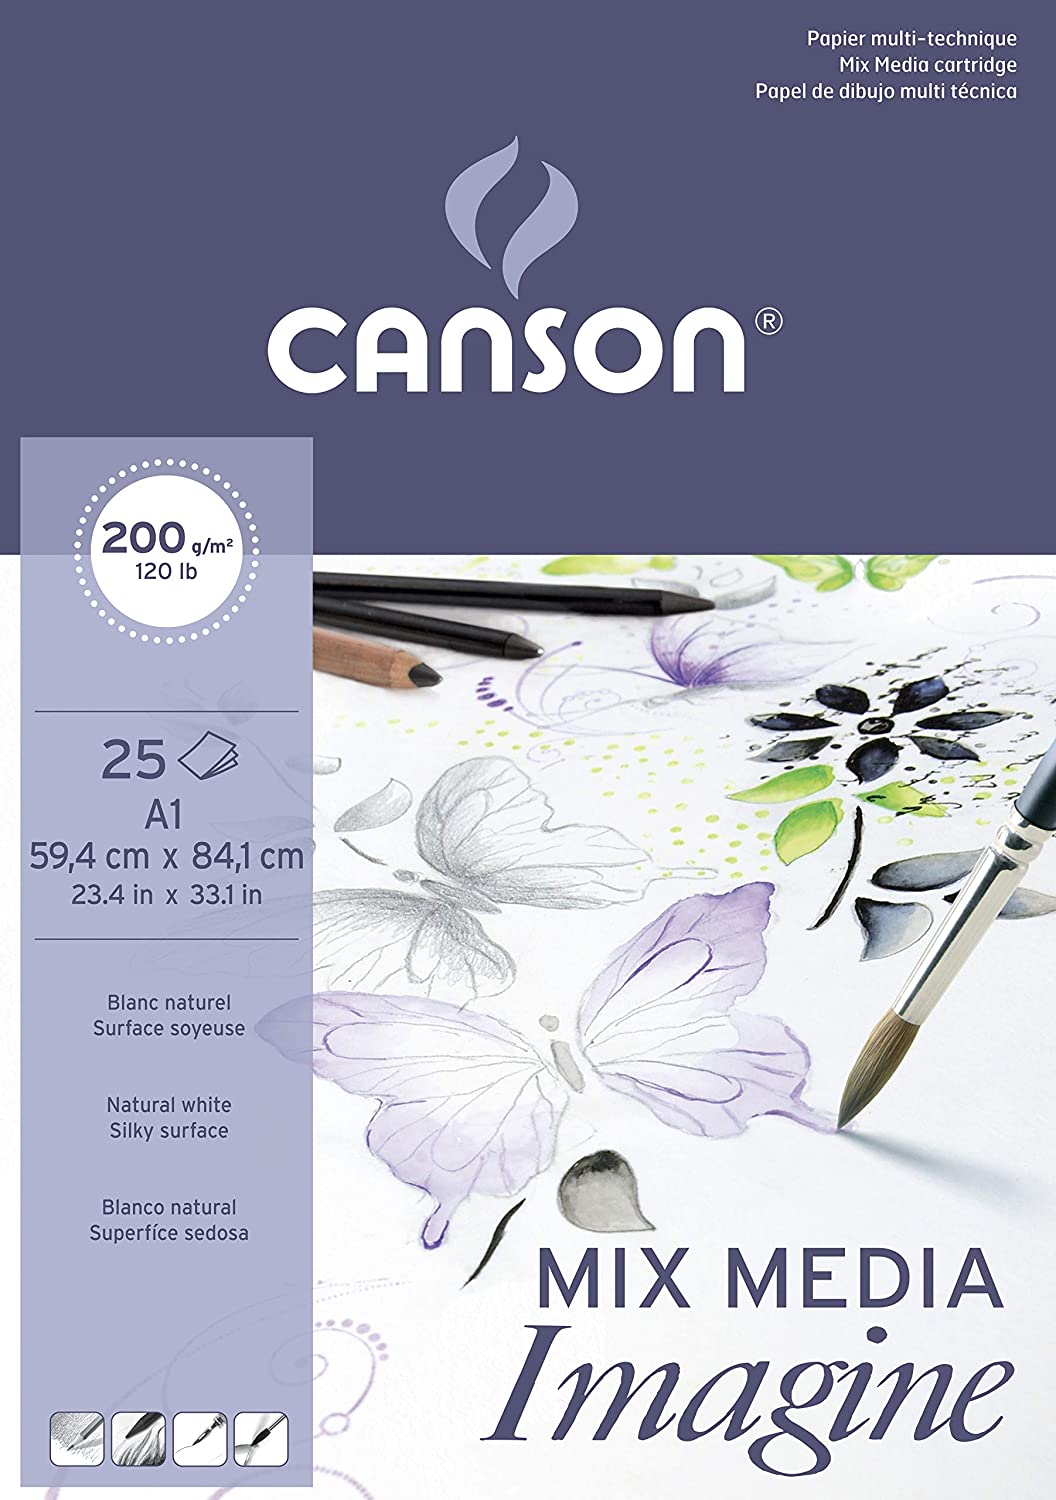 Canson - CANSON Bloc a dessin Imagine, format A1, 200 g/m2